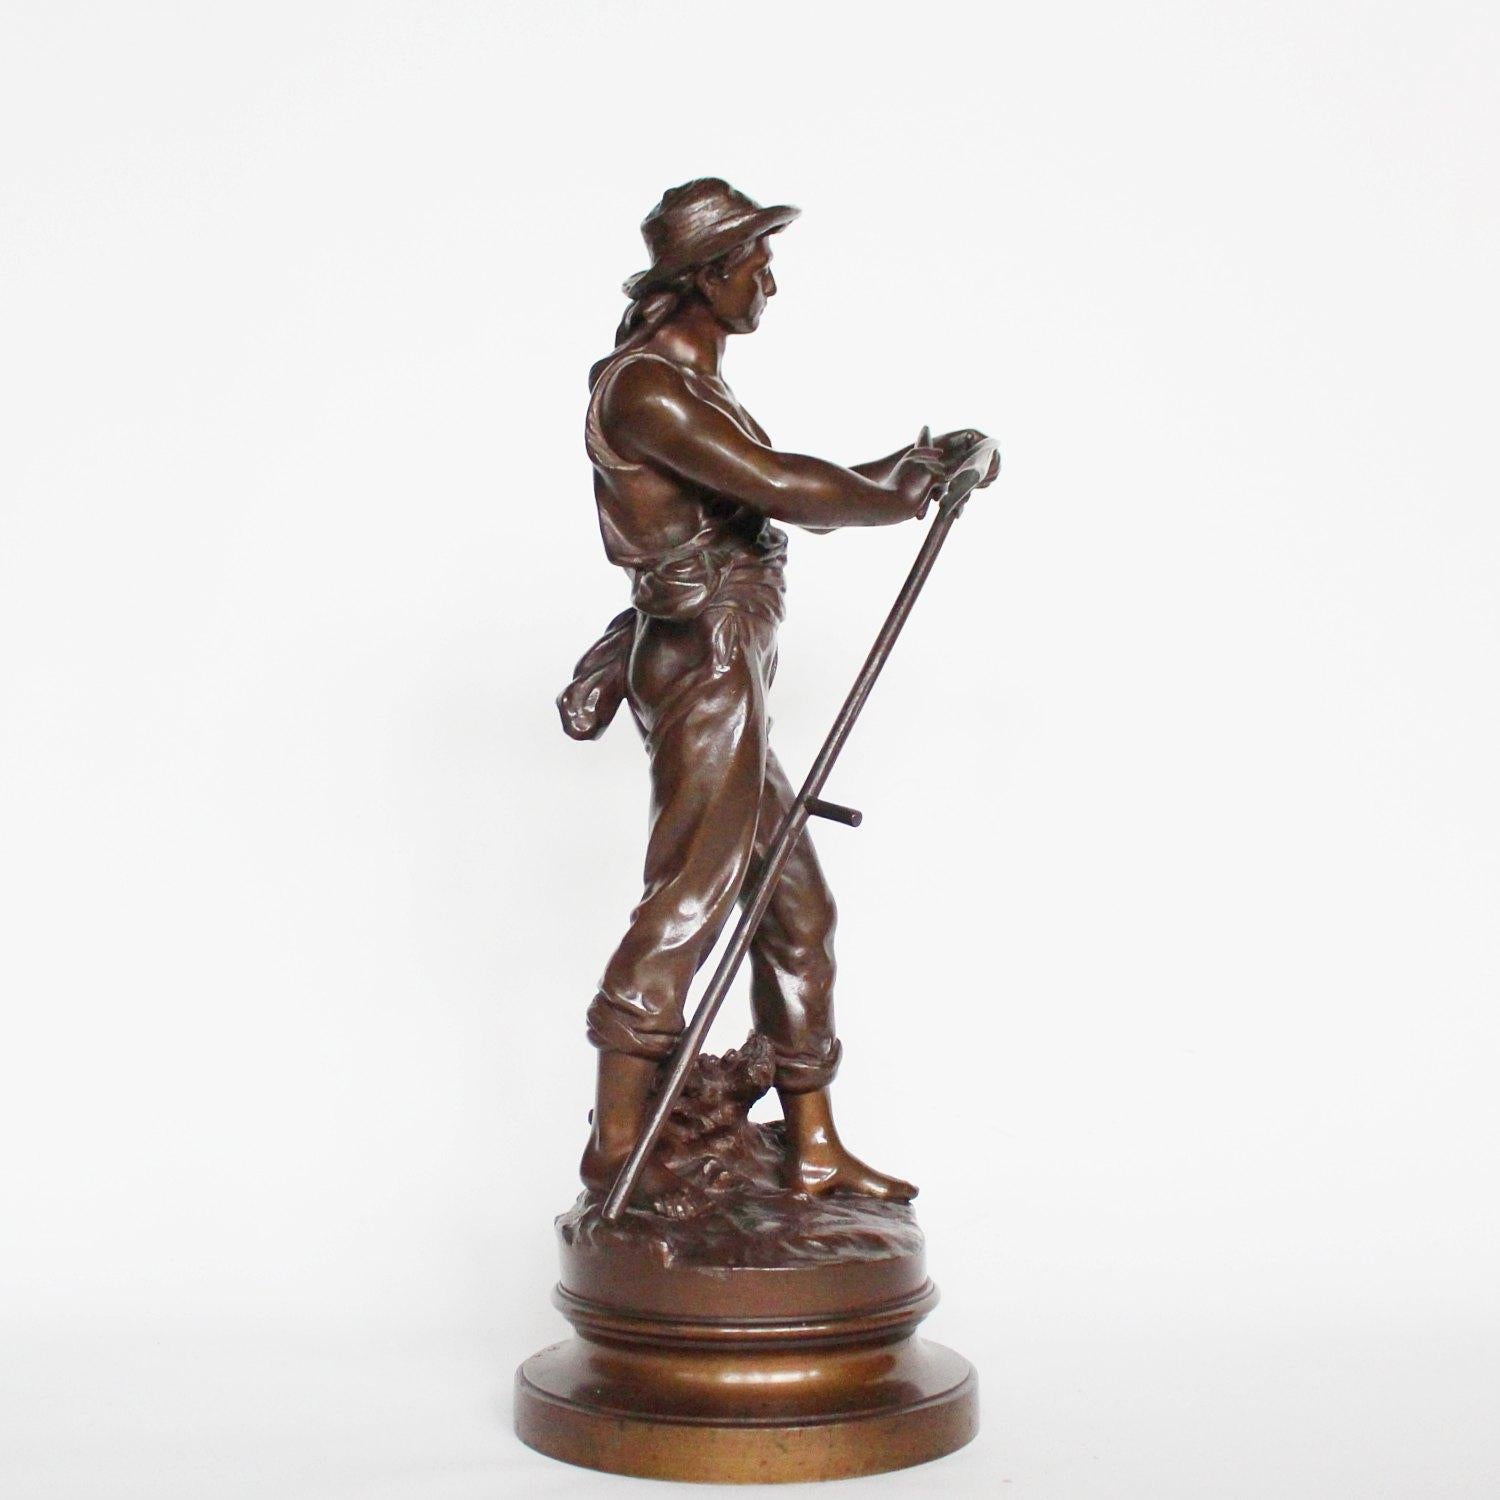 An Art Nouveau sculpture of a field worker sharpening his scythe. Solid bronze. Signed Math Moreau to base, stamped Medaille D'honeur. 

Artist: Mathurin Moreau, (1822-1912).
 